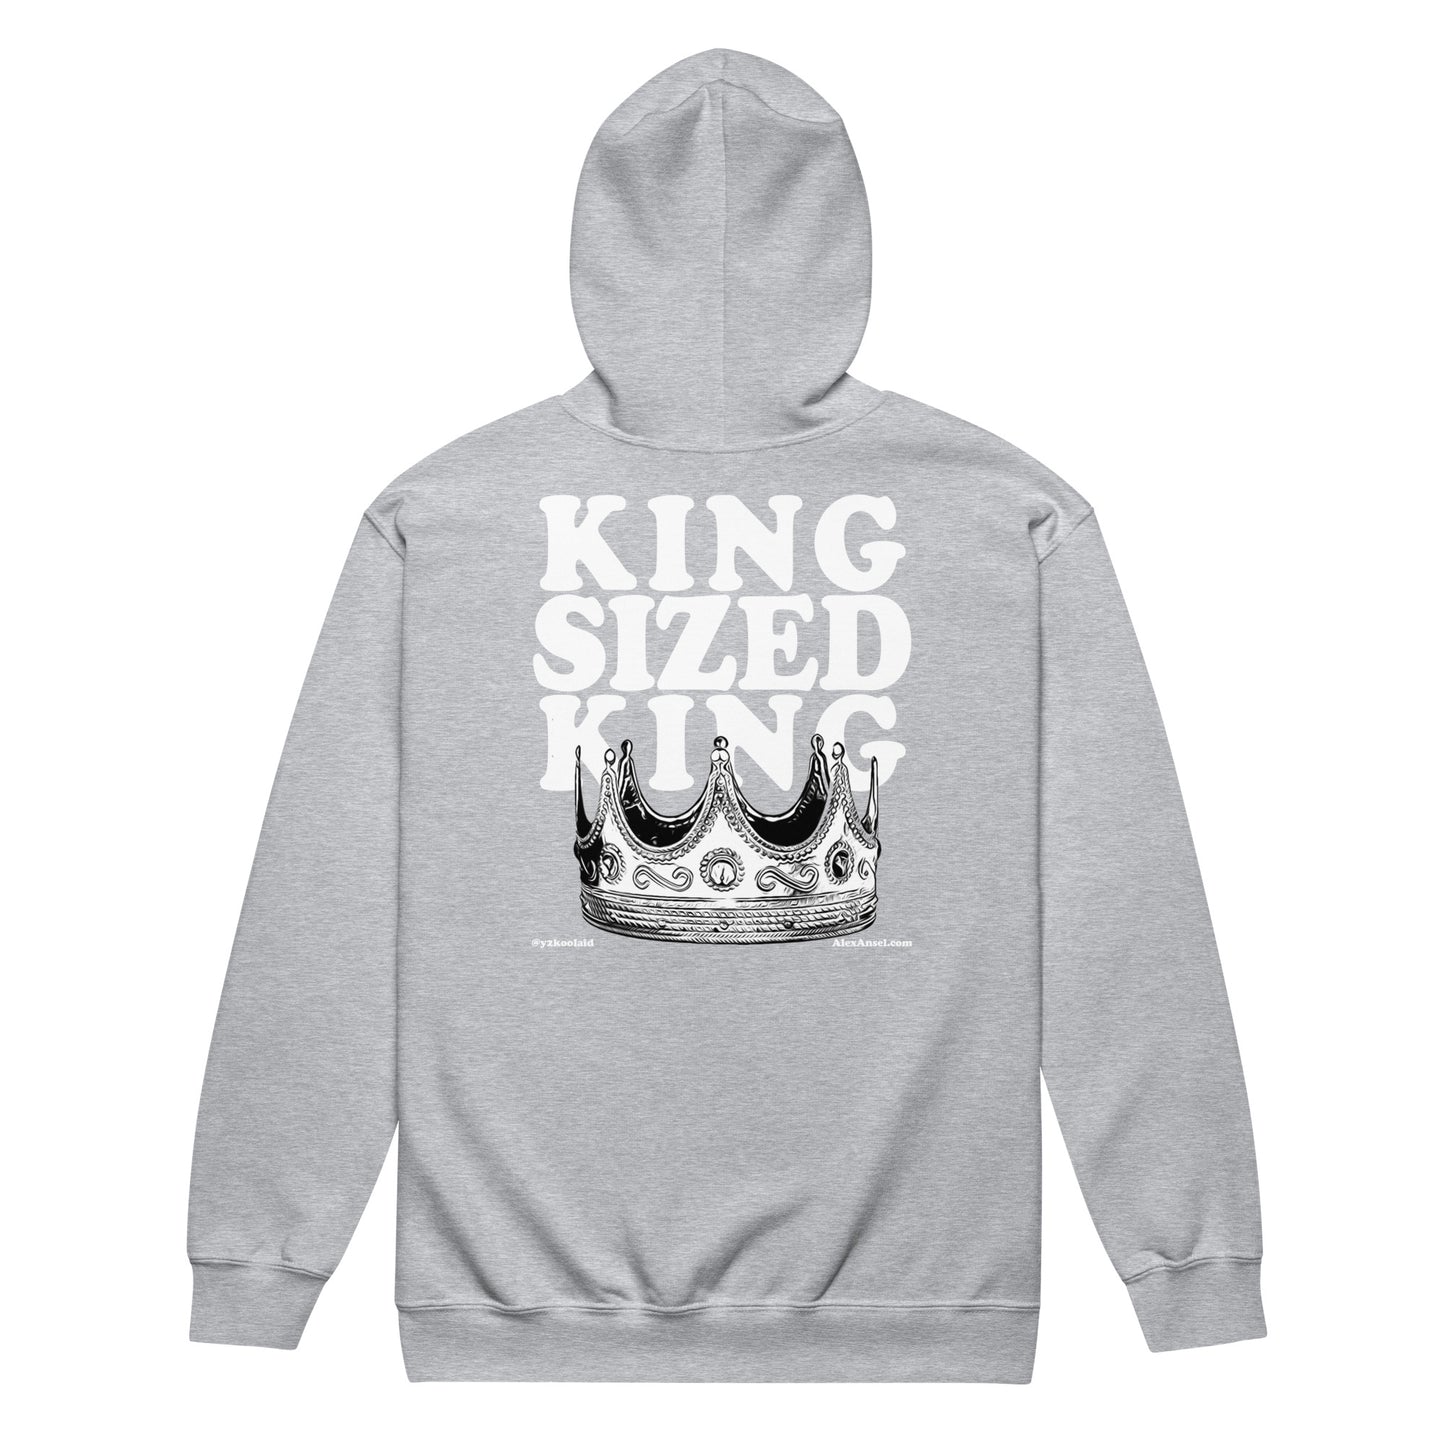 KING SIZED KING (w) Zip Up Hoodie